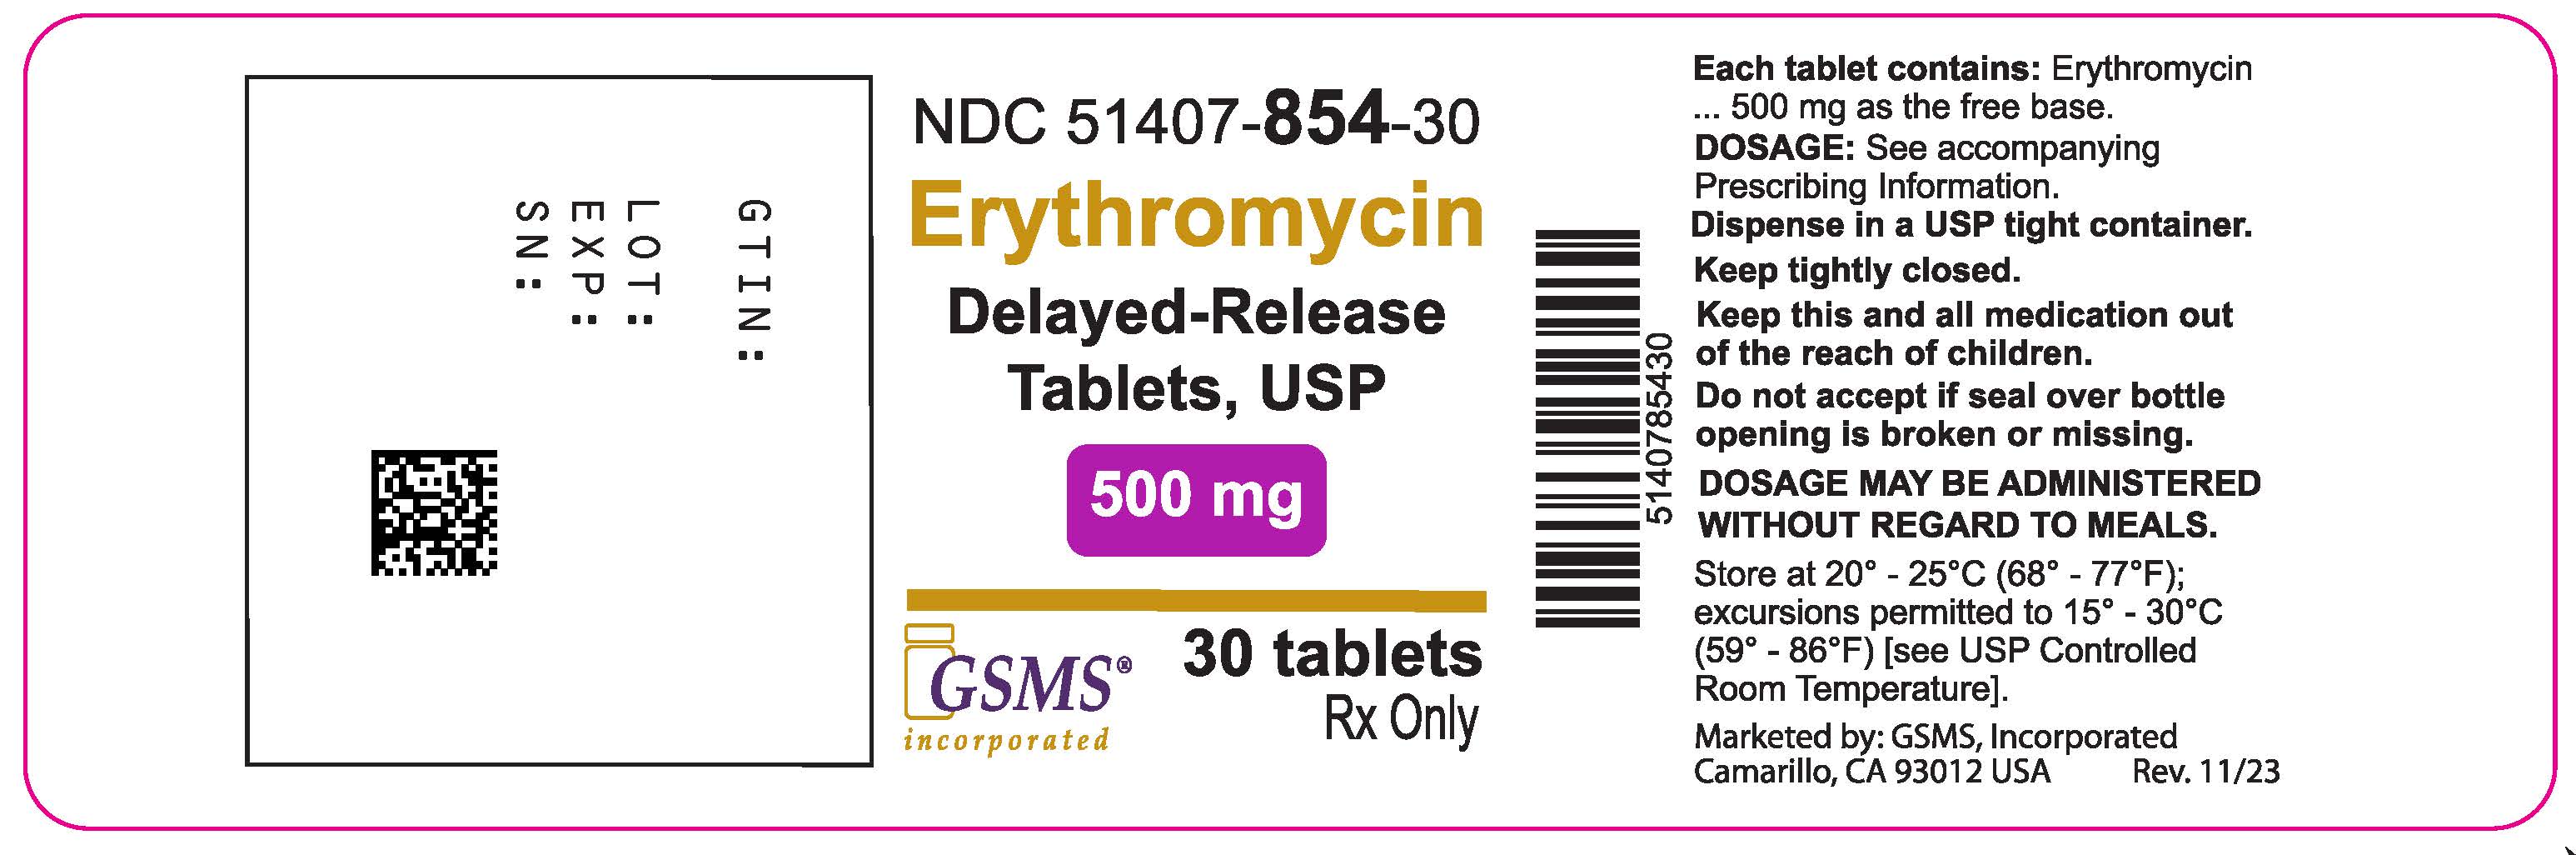 51407-854-30OL - Erythromycin DR Tablets - Rev. 1123.jpg